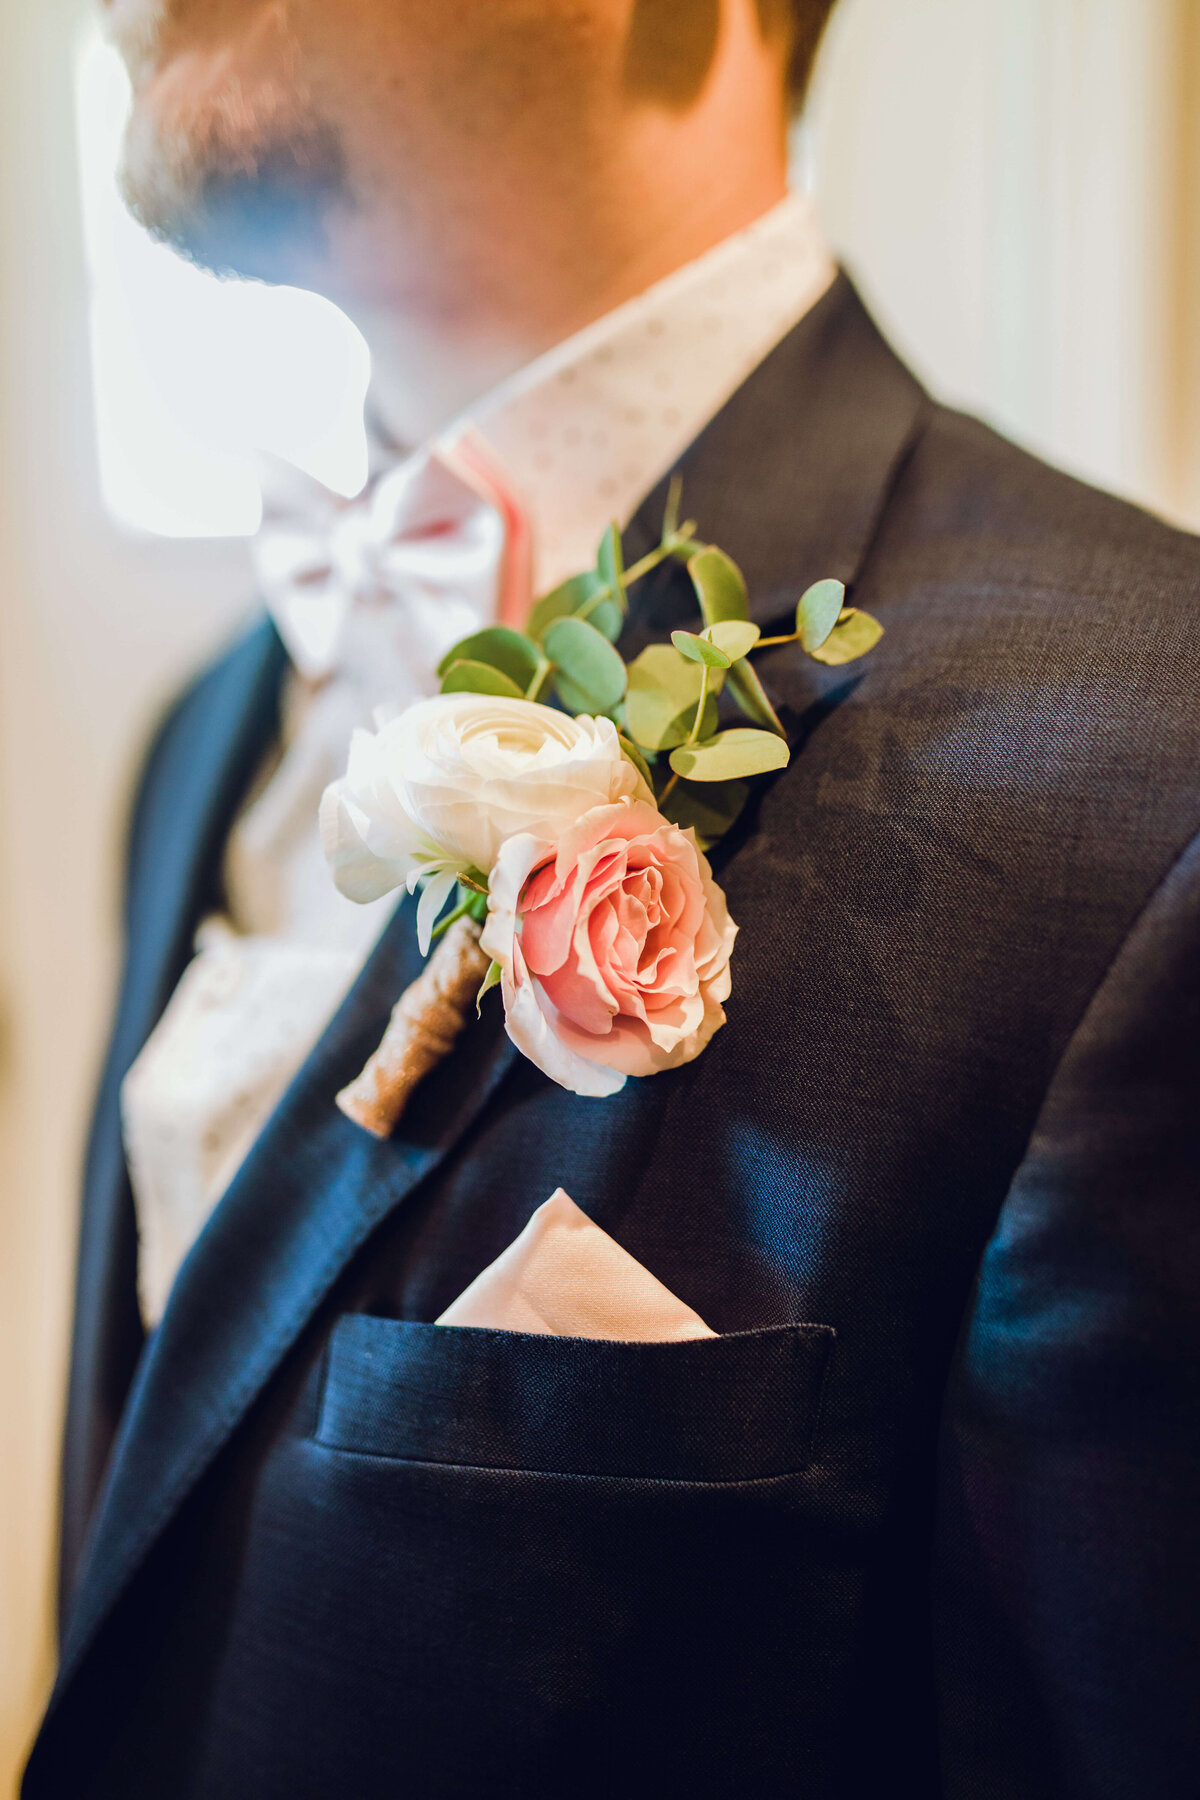 groom pocket square, suit & flowers closeup before intimate wedding